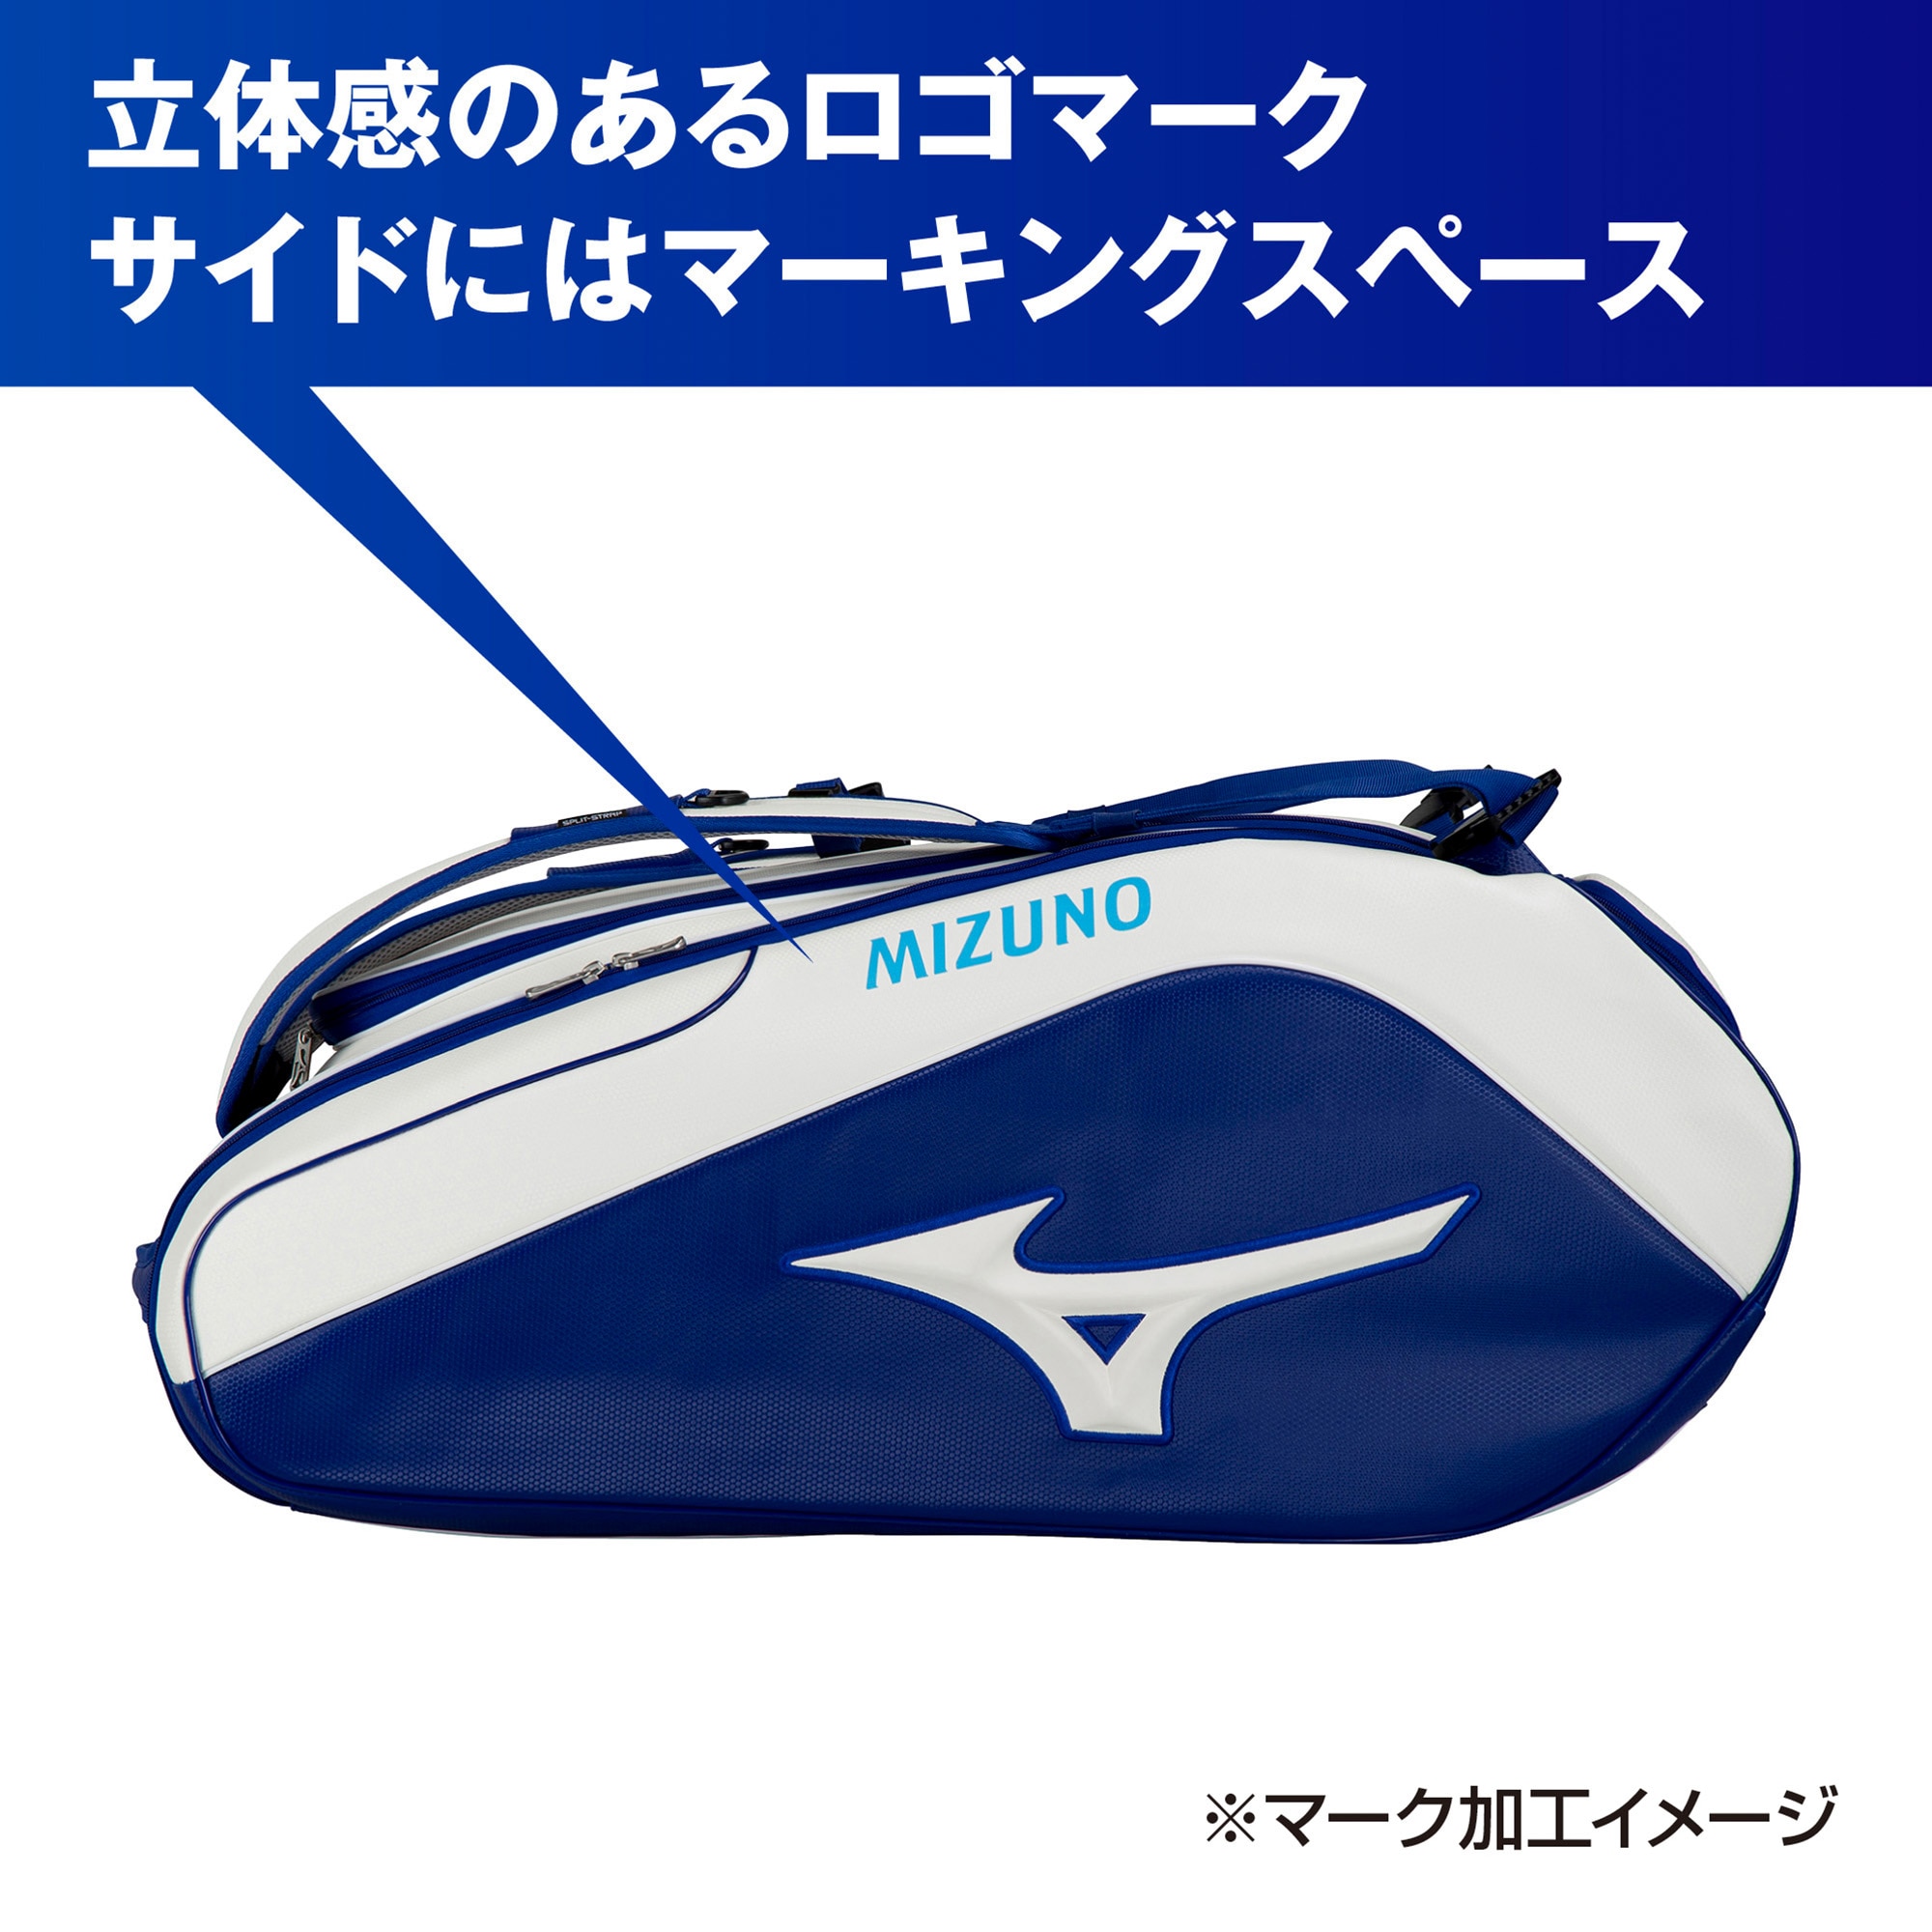 MIZUNO ラケットバッグ(9本入れ)TOUR06g 70L 63GD3002